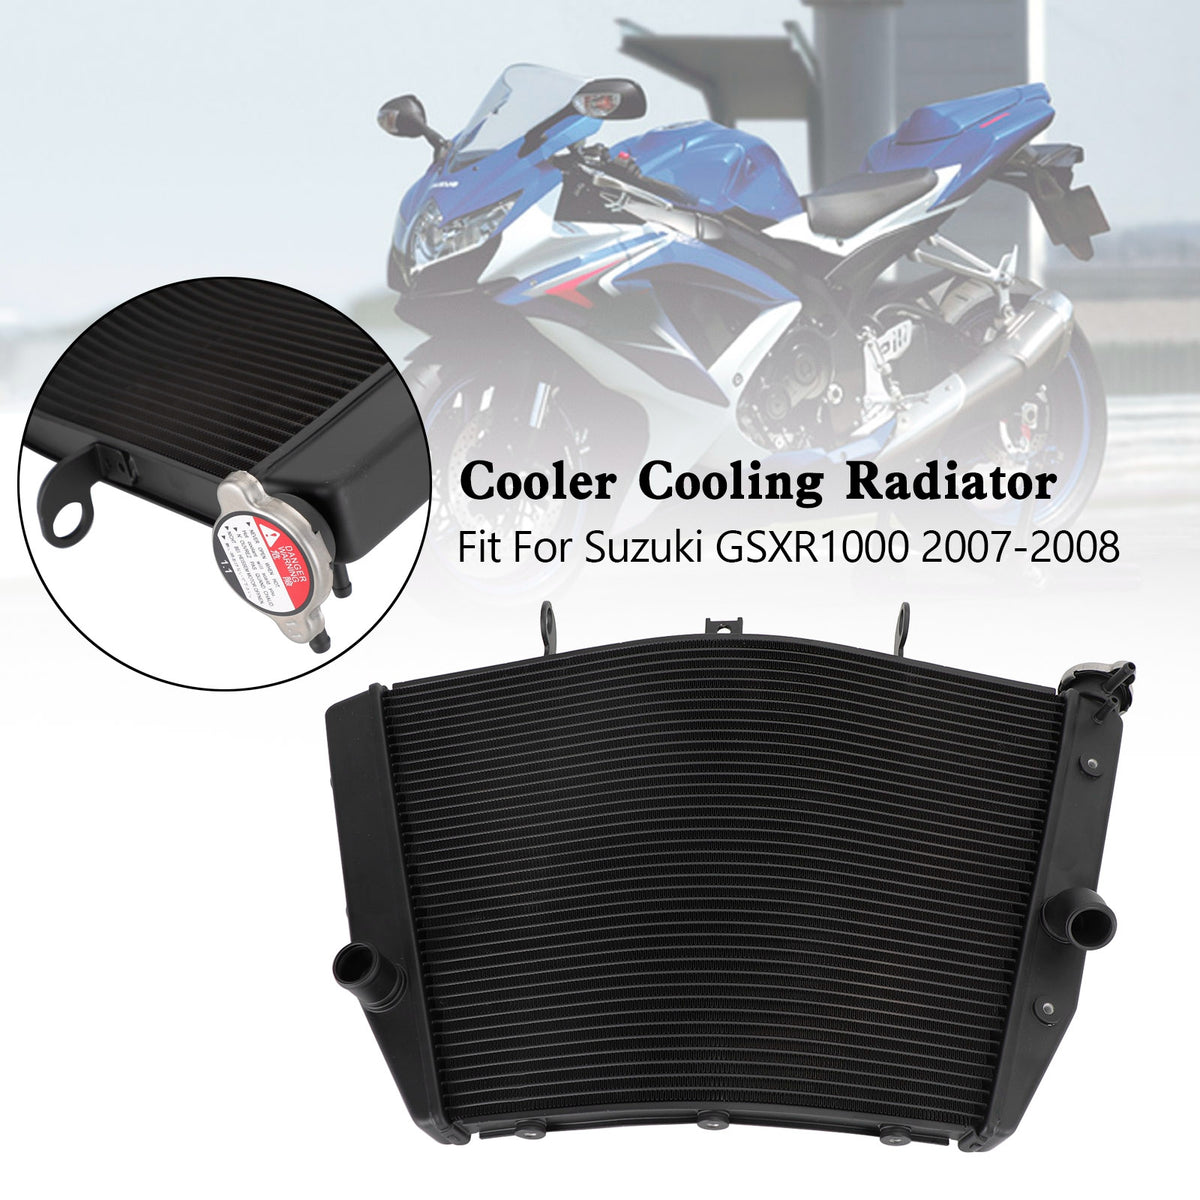 Aluminum Radiator Cooler Cooling For Suzuki GSXR1000 GSX-R 1000 2007-2008 K7